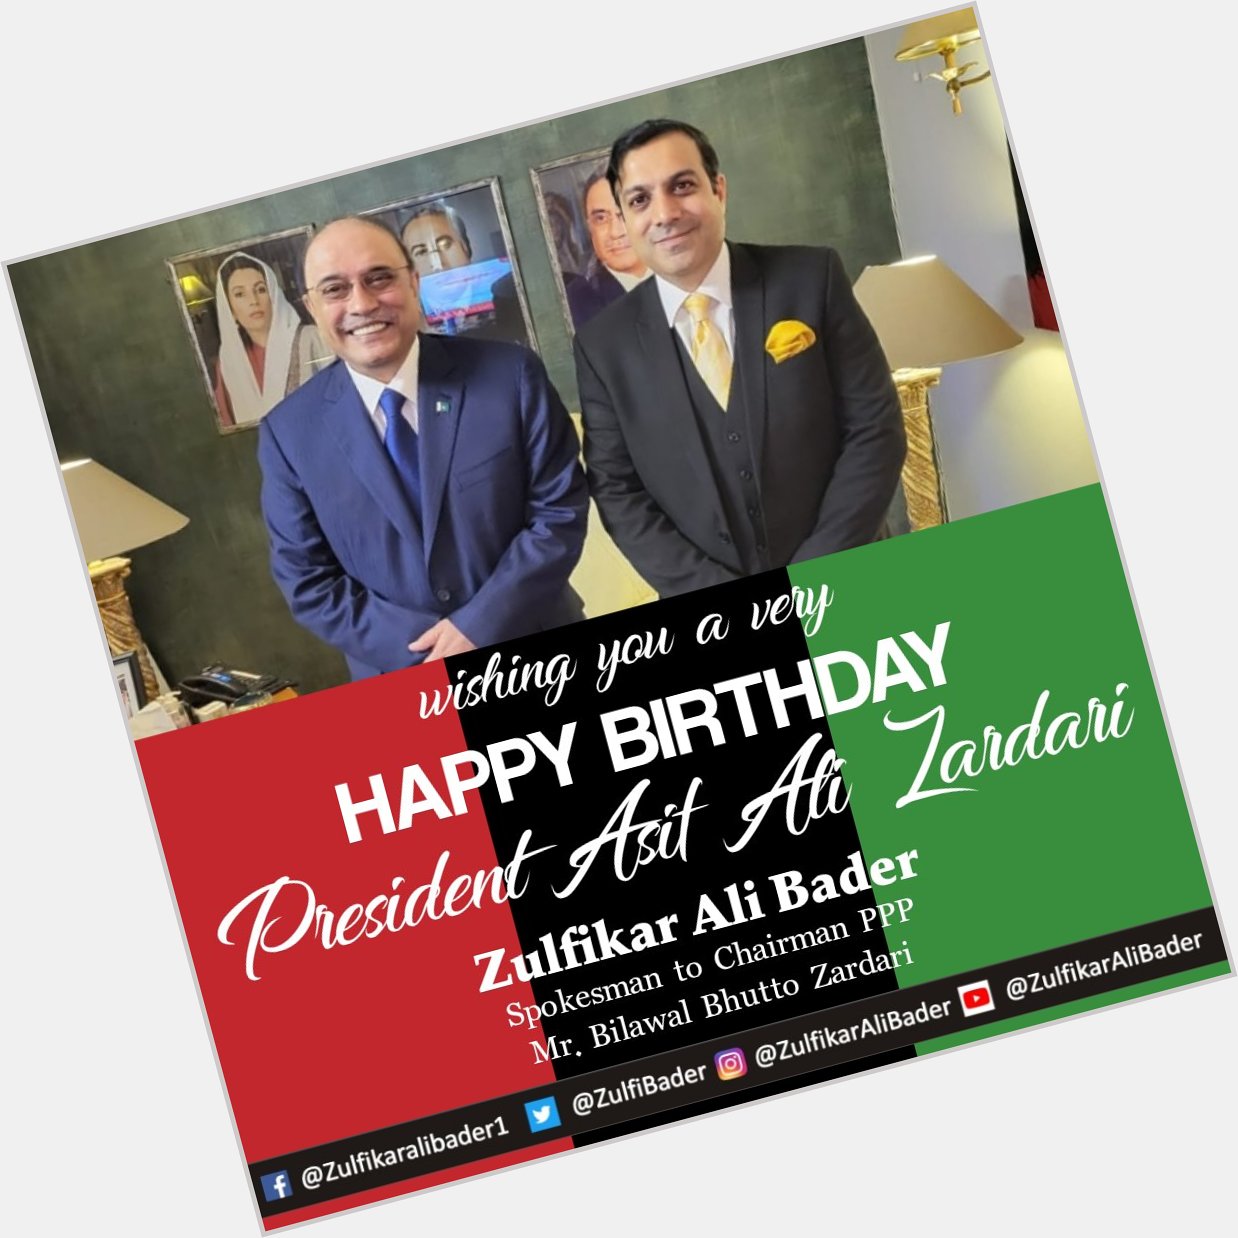 Wishing you a very Happy Birthday President Asif Ali Zardari. 